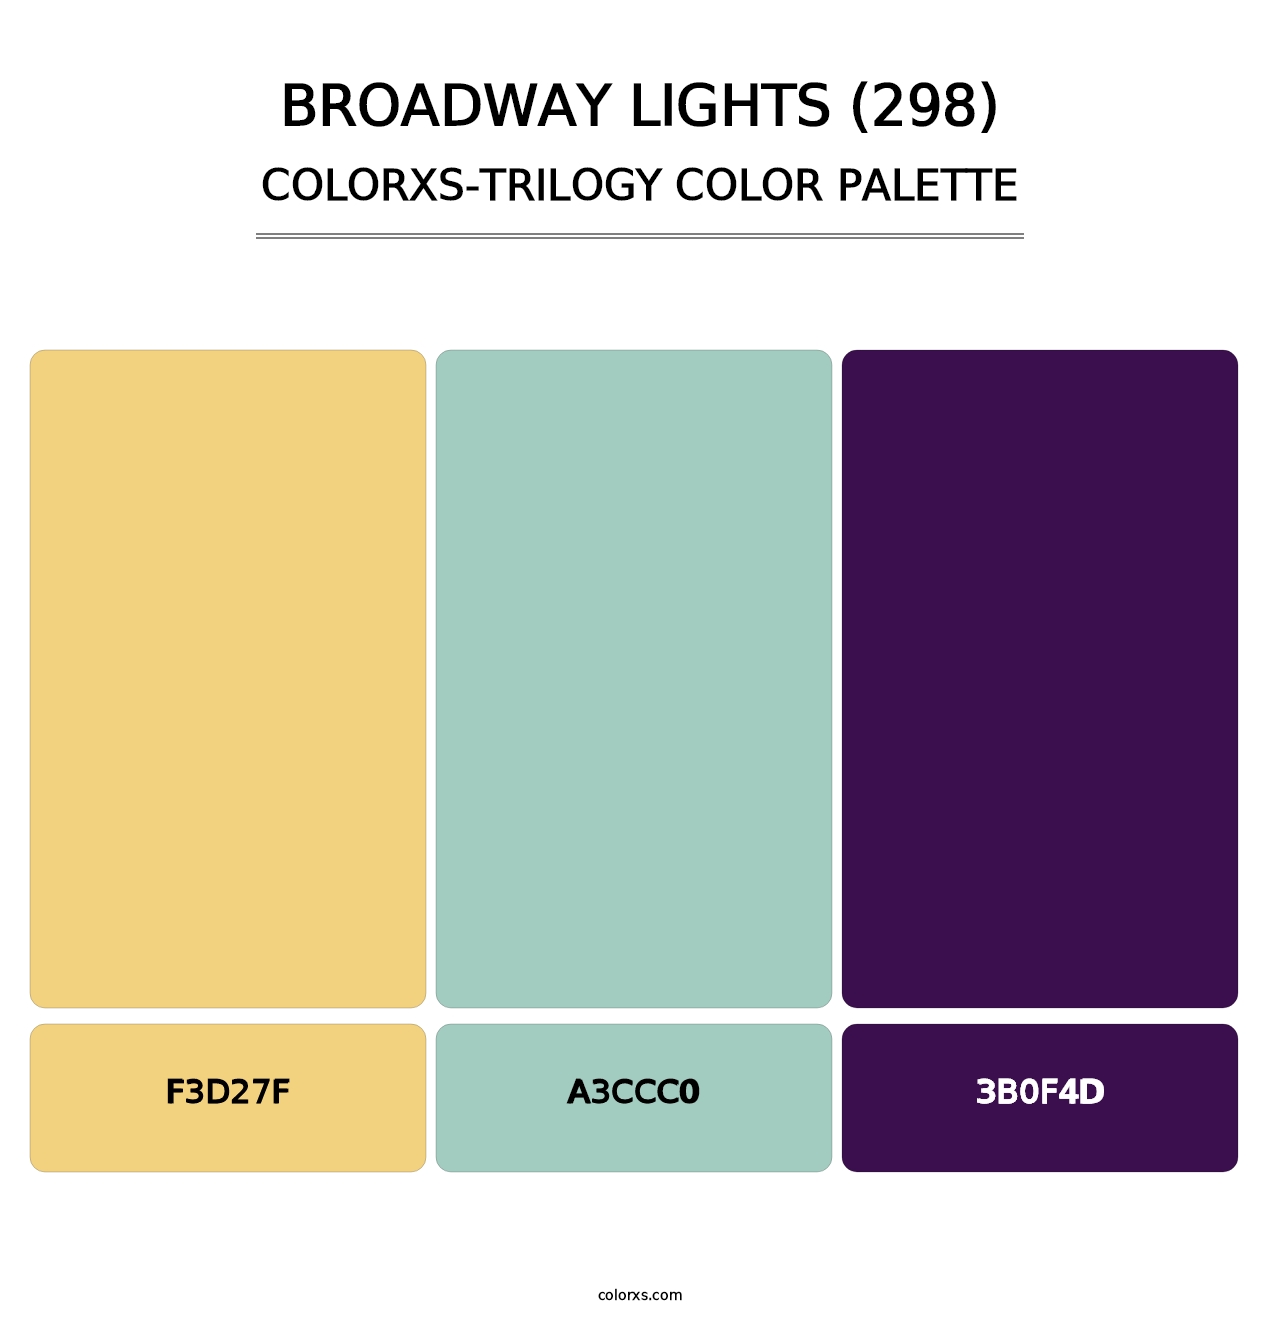 Broadway Lights (298) - Colorxs Trilogy Palette